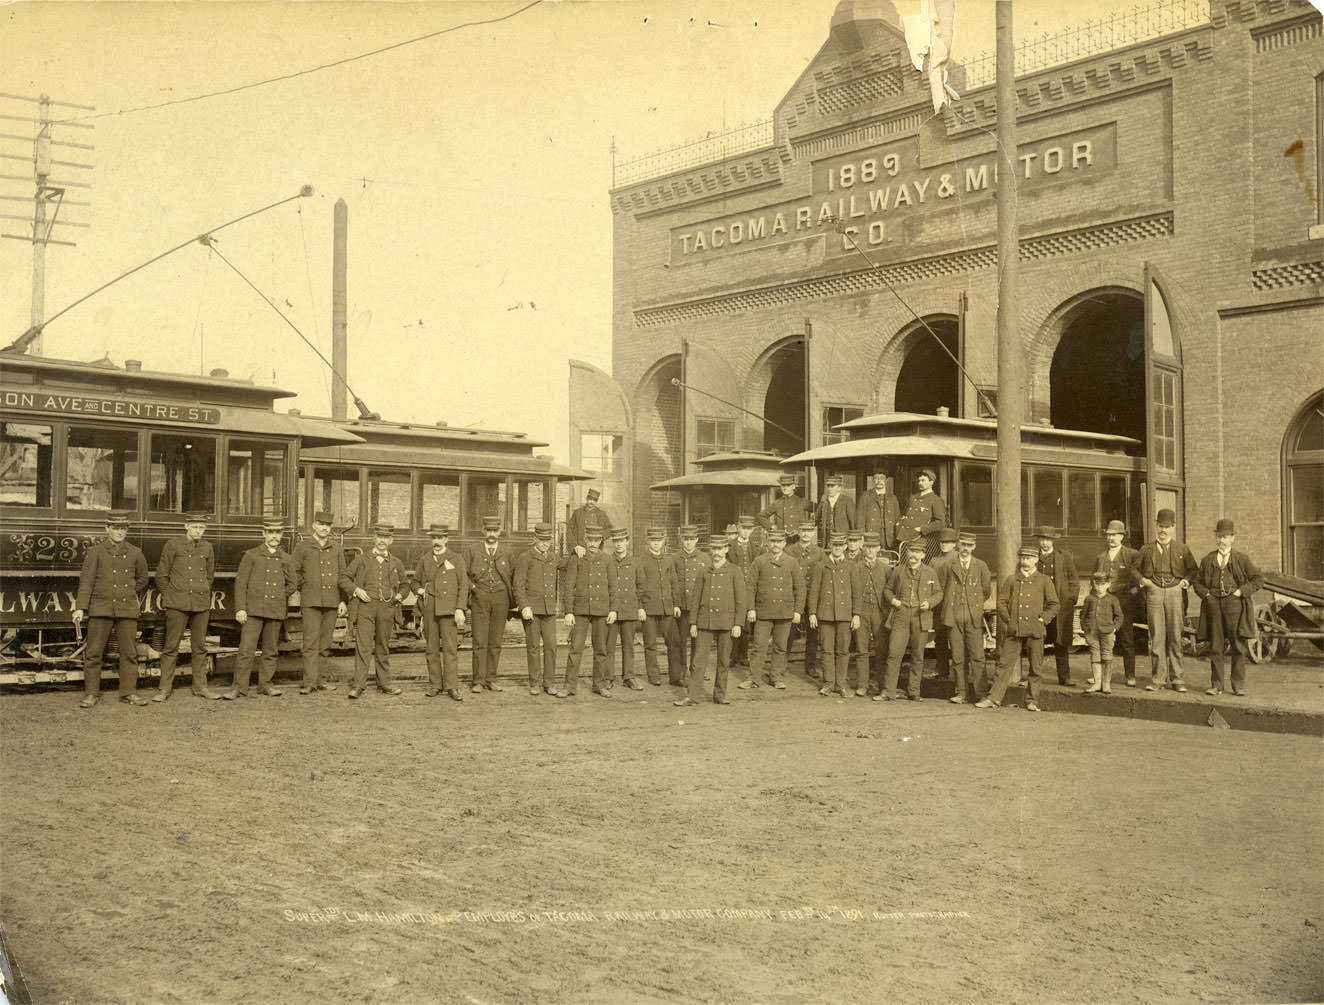 Supertdt L. M. Hamilton and Employees of Tacoma Railway & Motor Company, 1891